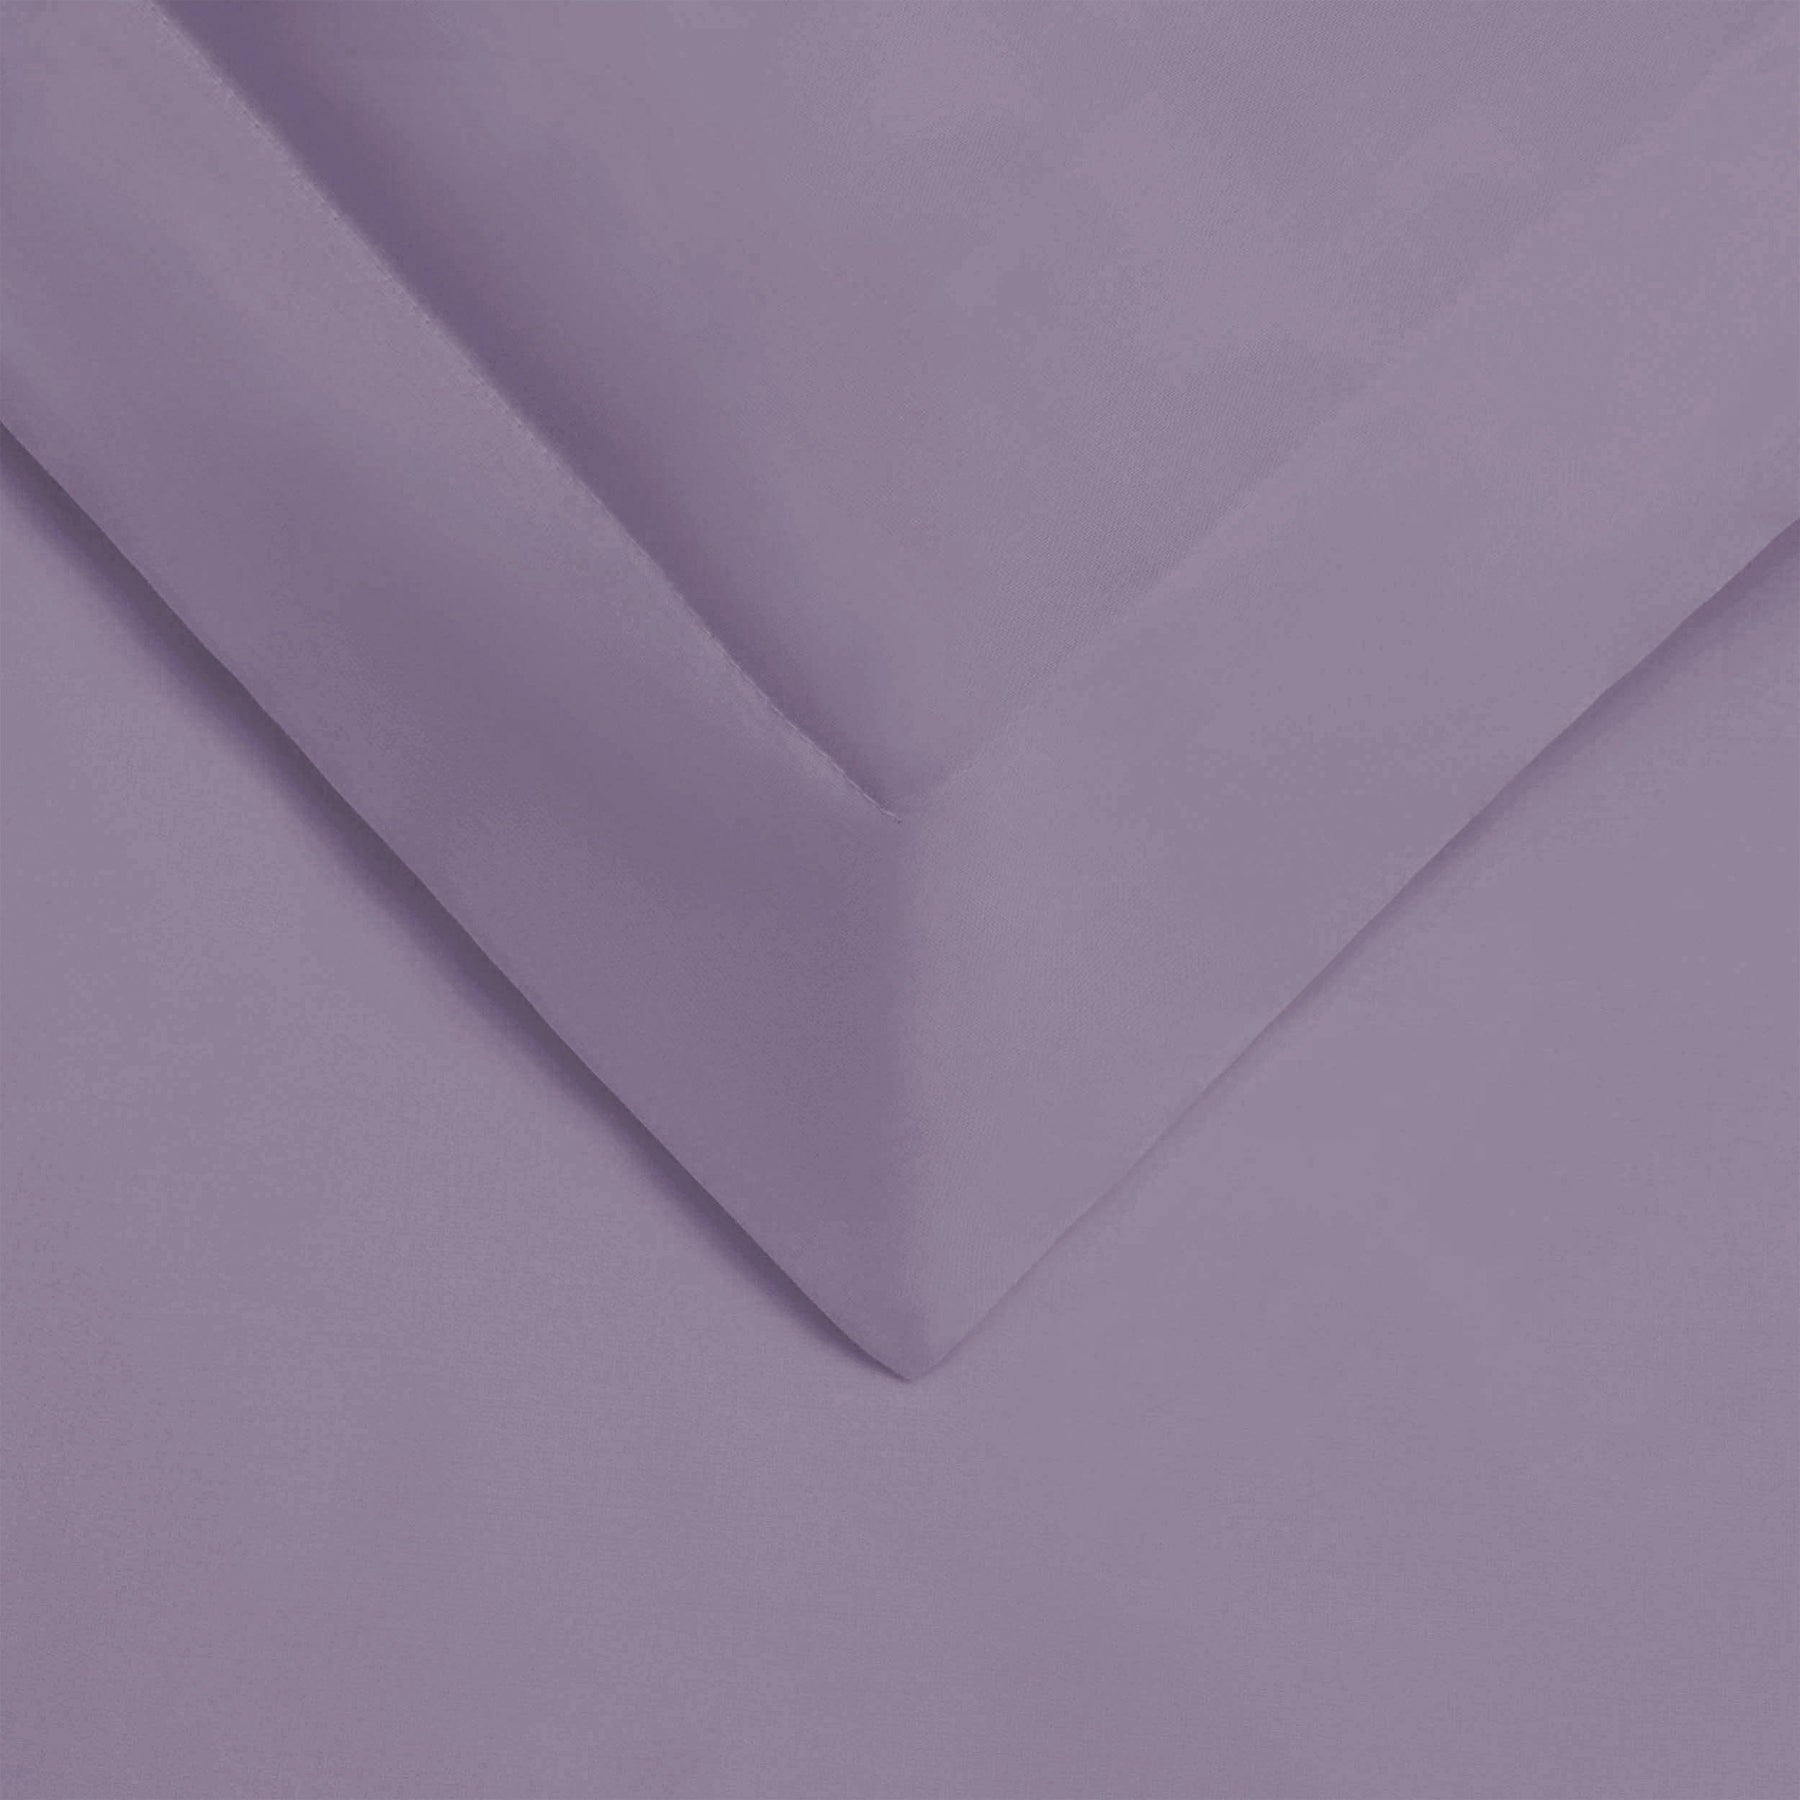  Superior Premium Egyptian Cotton 530 Thread Count Solid Duvet Cover Set - Lavender